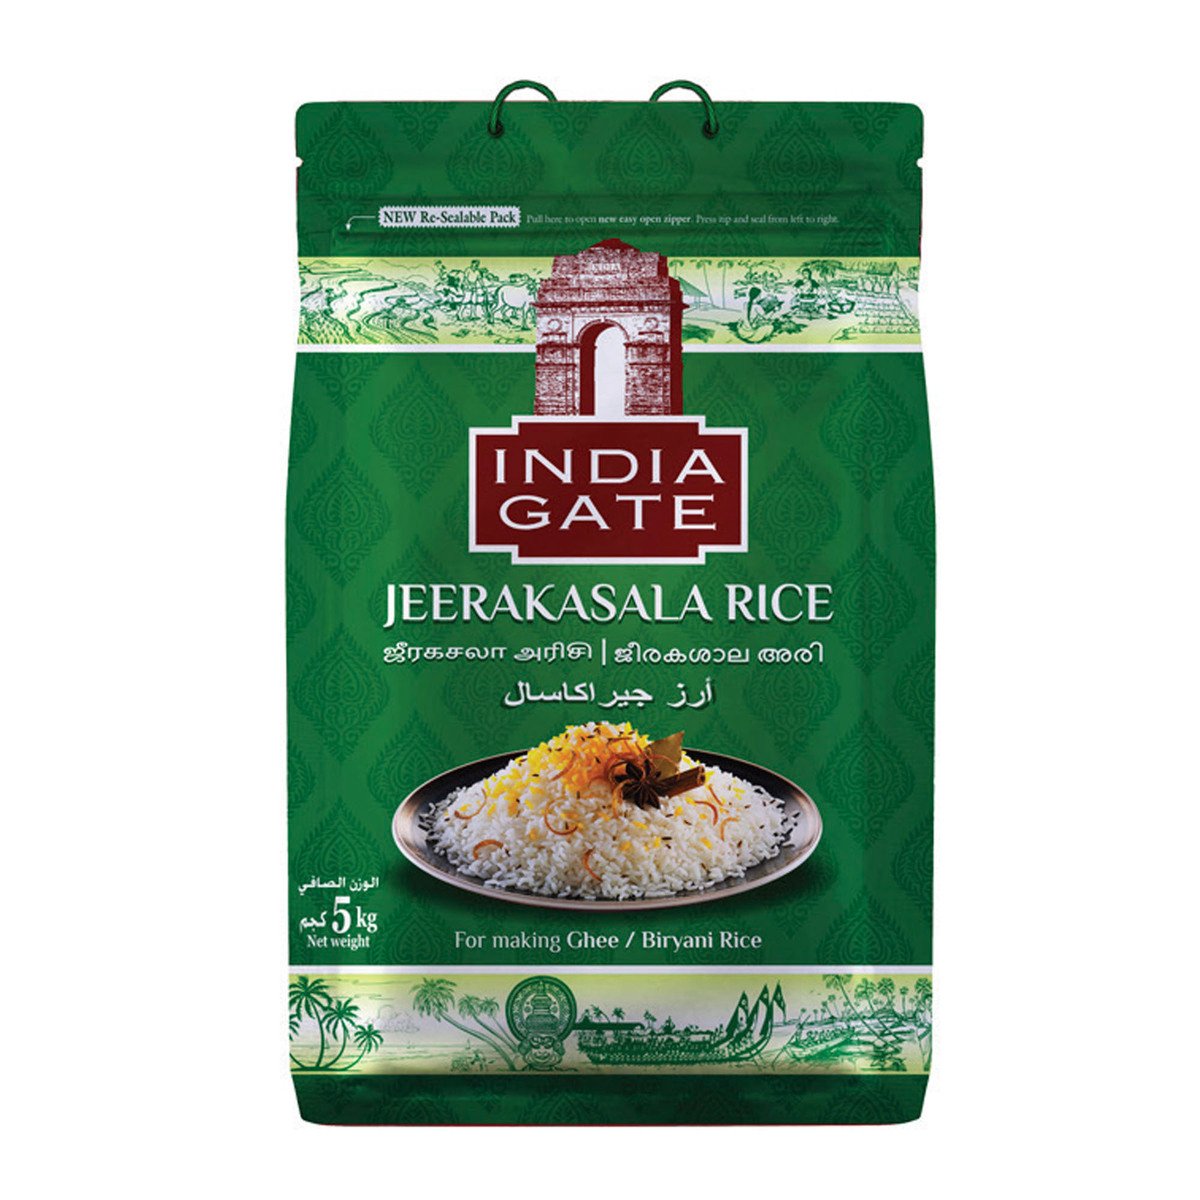 India Gate Jeerakasala Rice 5 kg